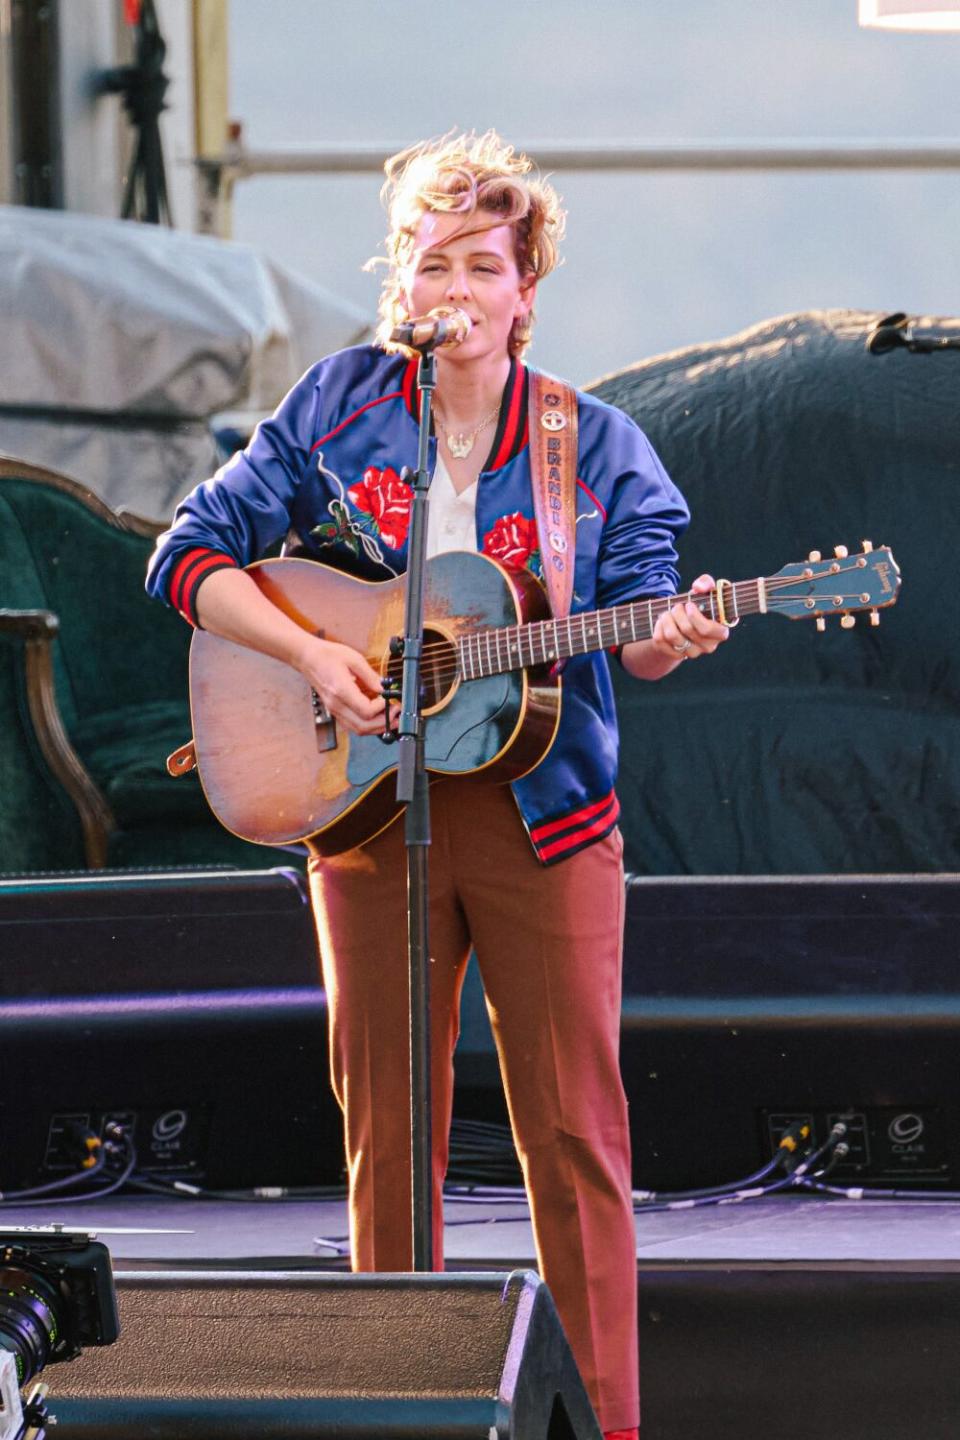 Brandi Carlile plays a guitar and sings onstage